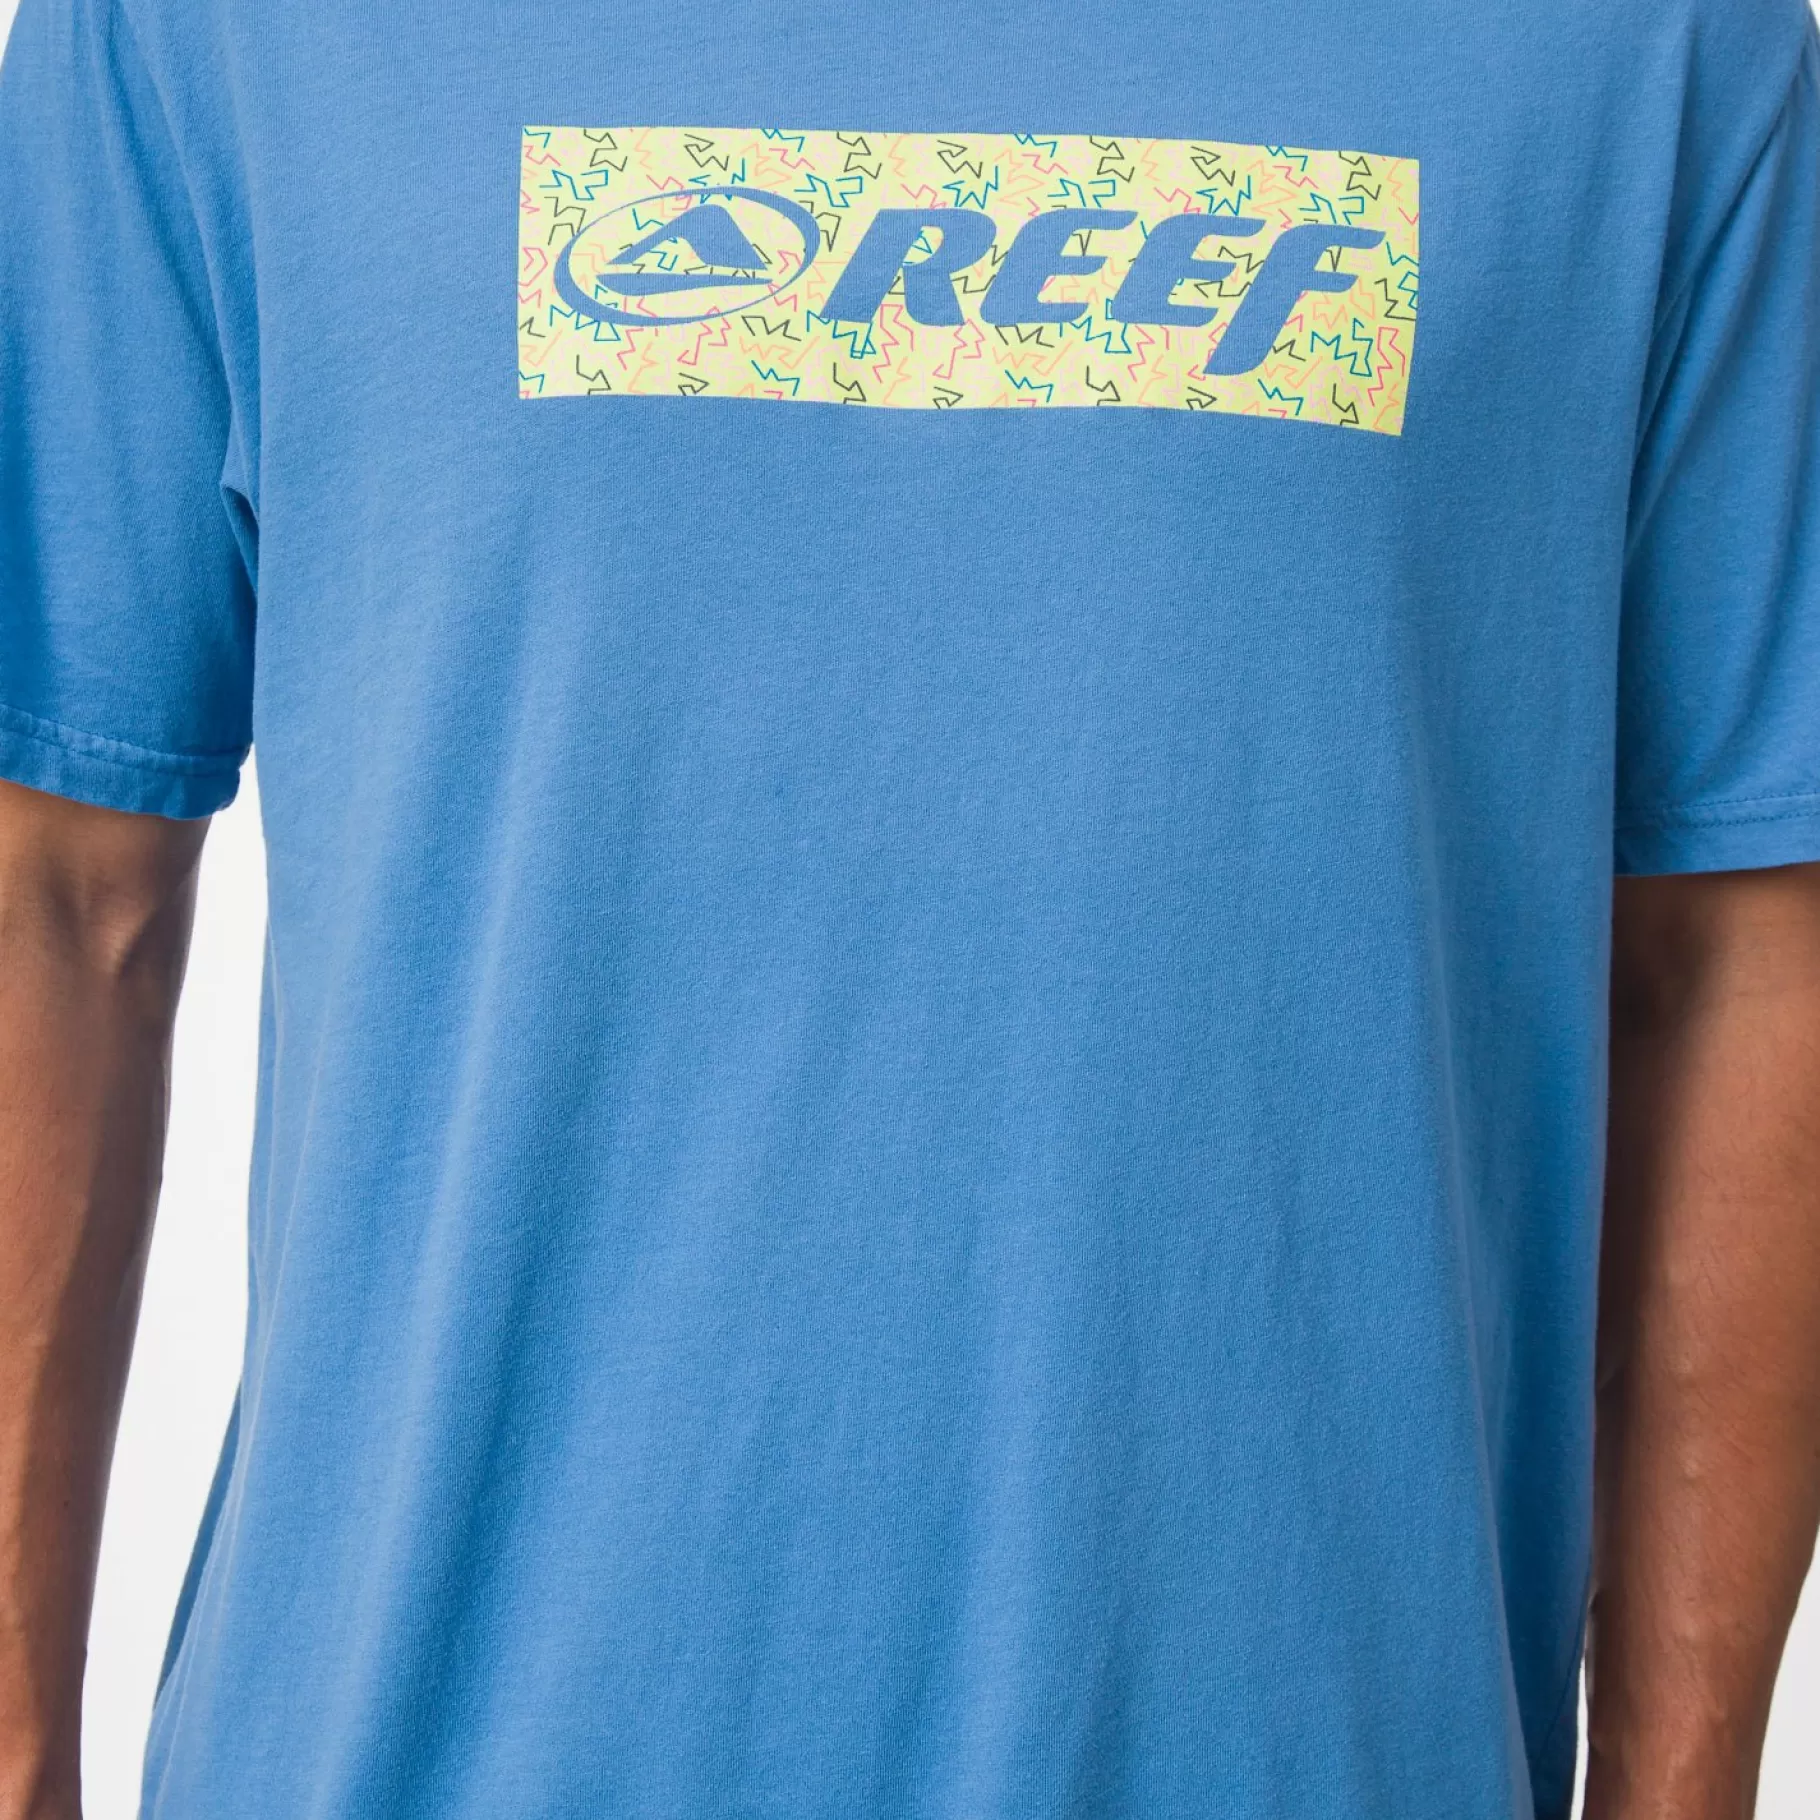 Men REEF T-Shirts>Decades Short Sleeve T-Shirt